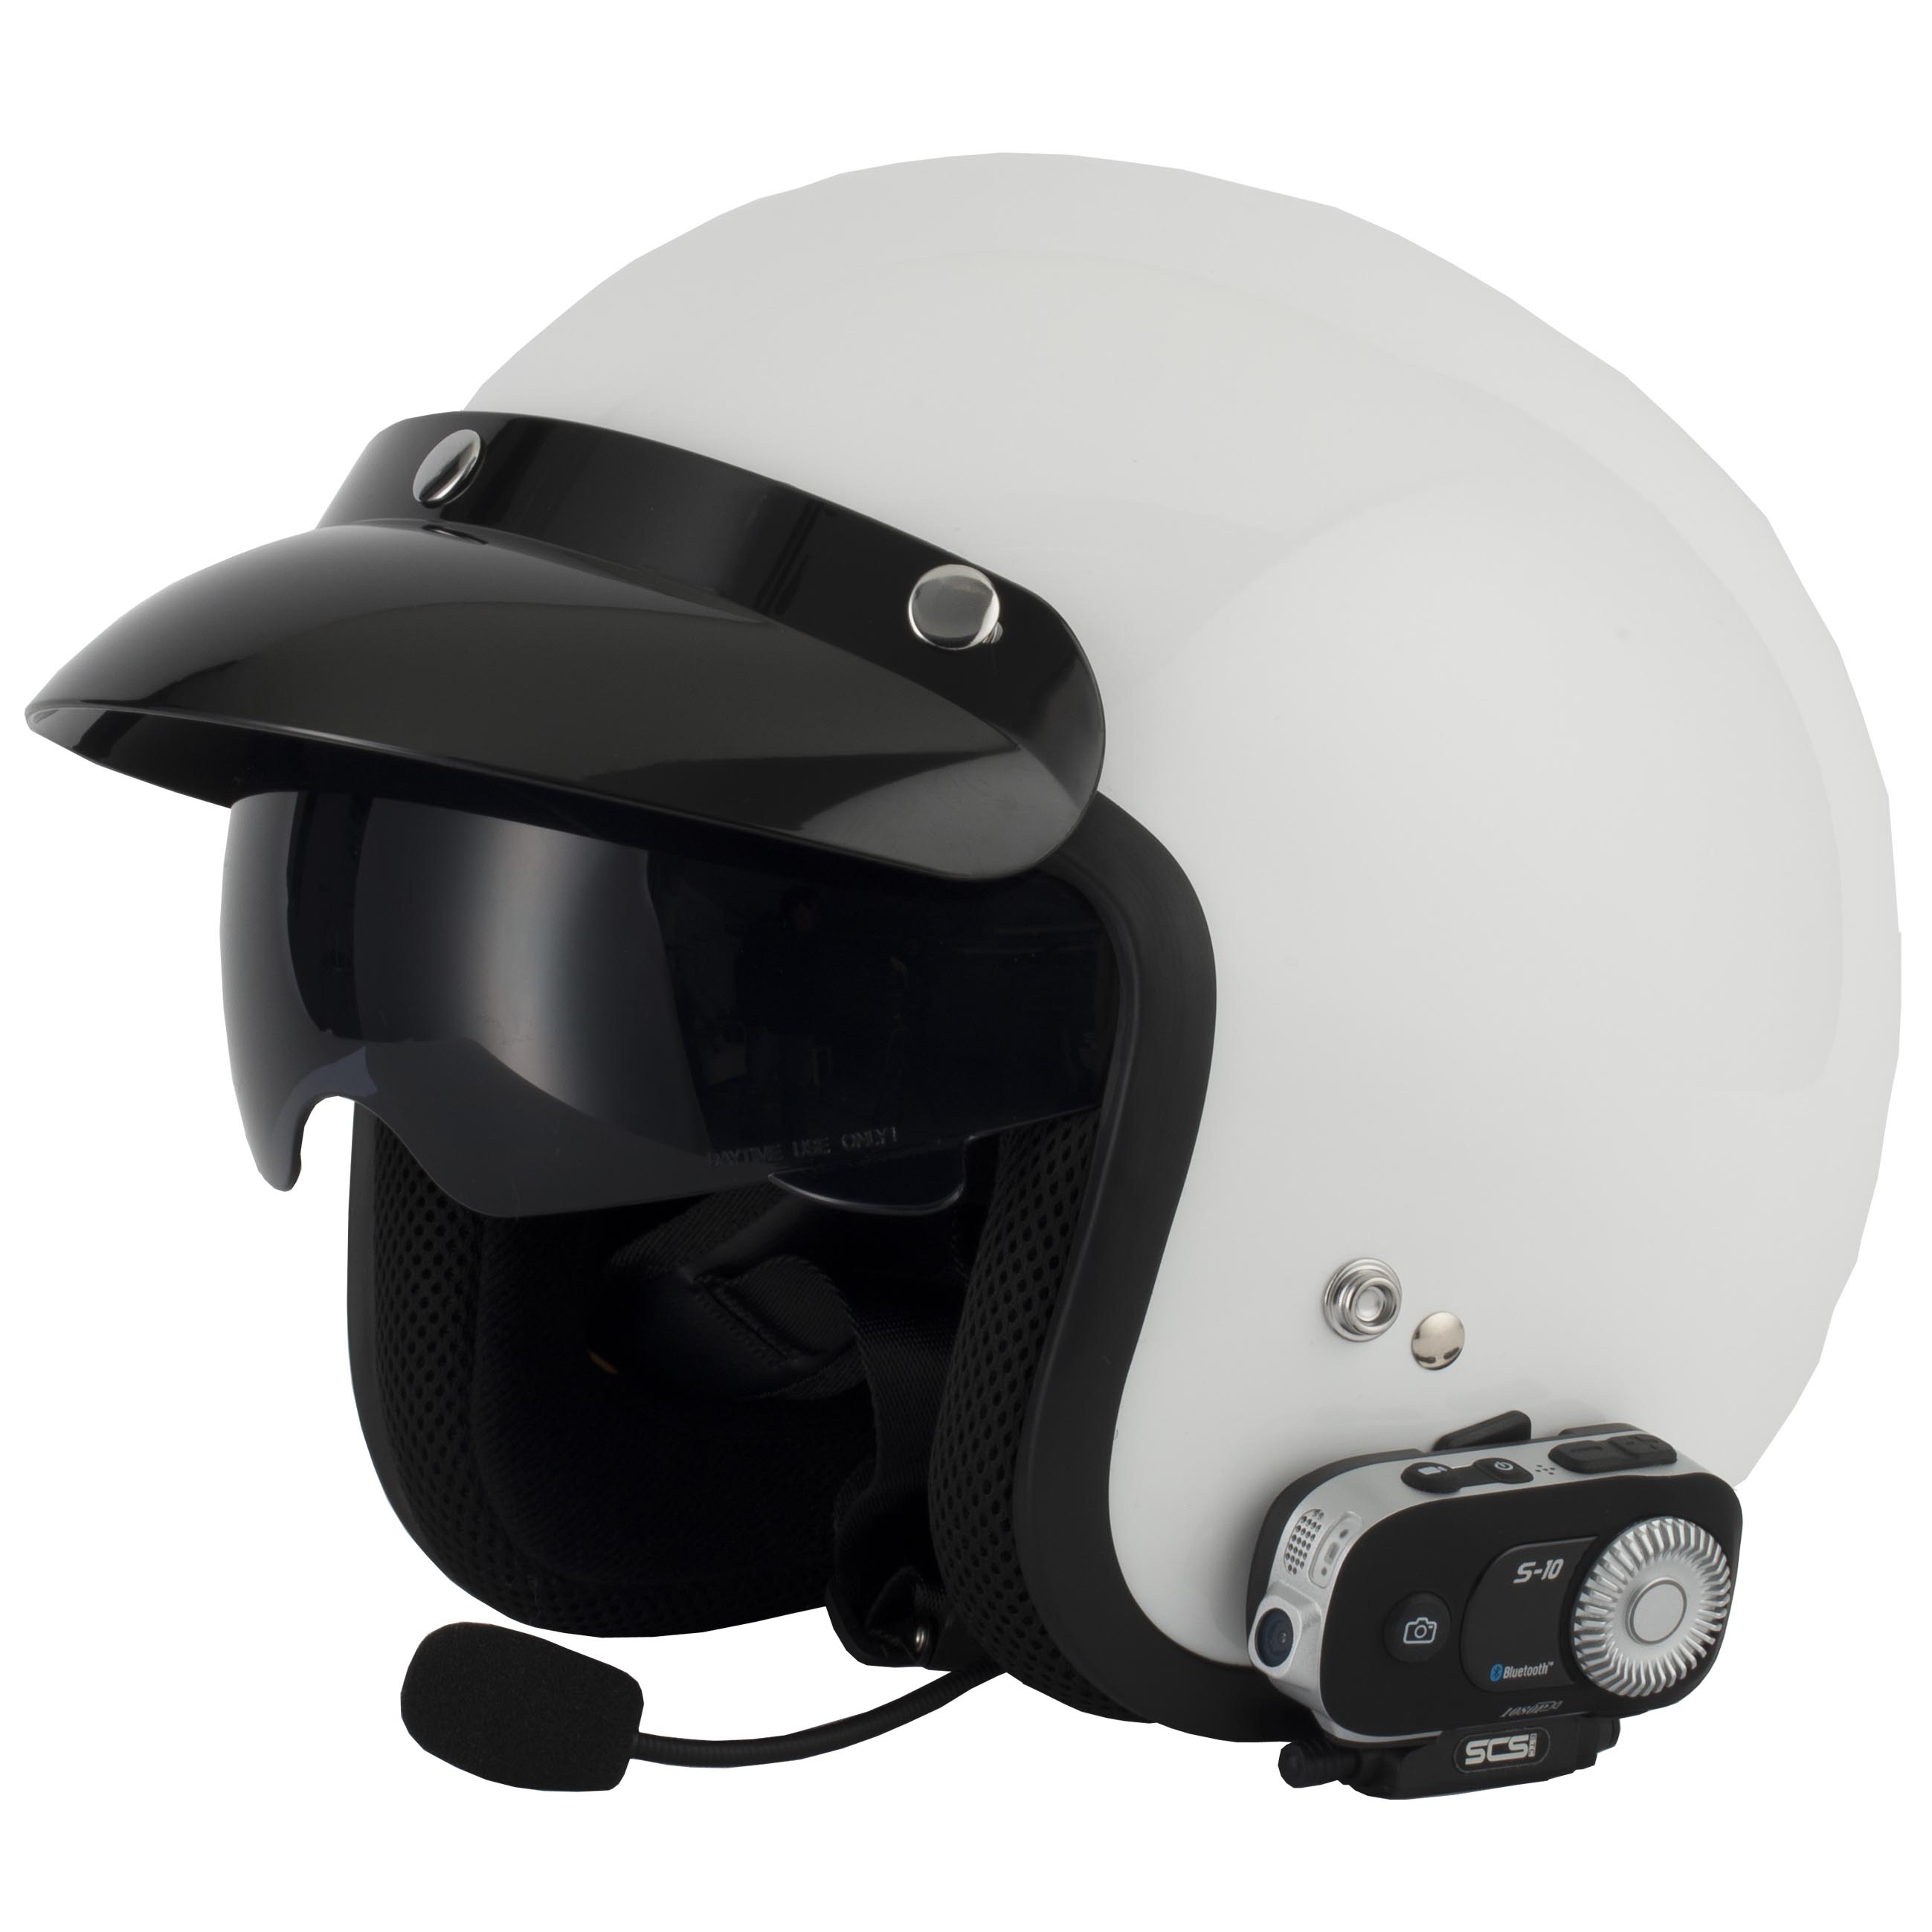 SCS Motorcycle Helmet Bluetooth Intercom With 1080p HD Camera Bluetooth